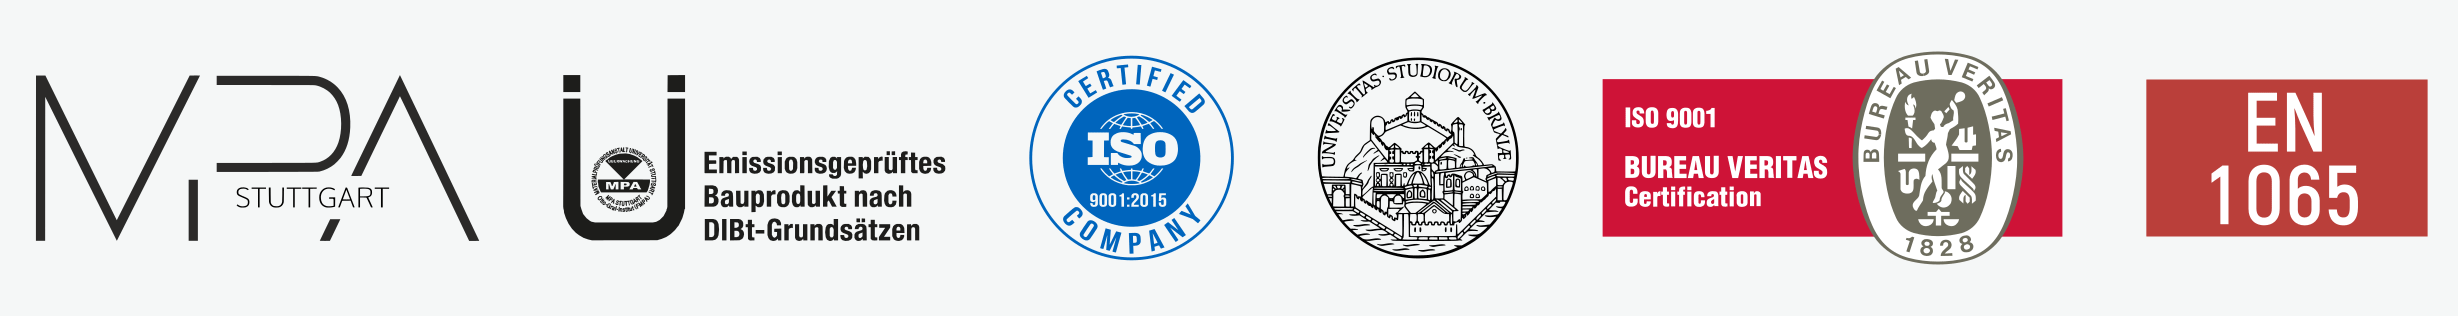 GBM Certifications - TUM e ISO 9001